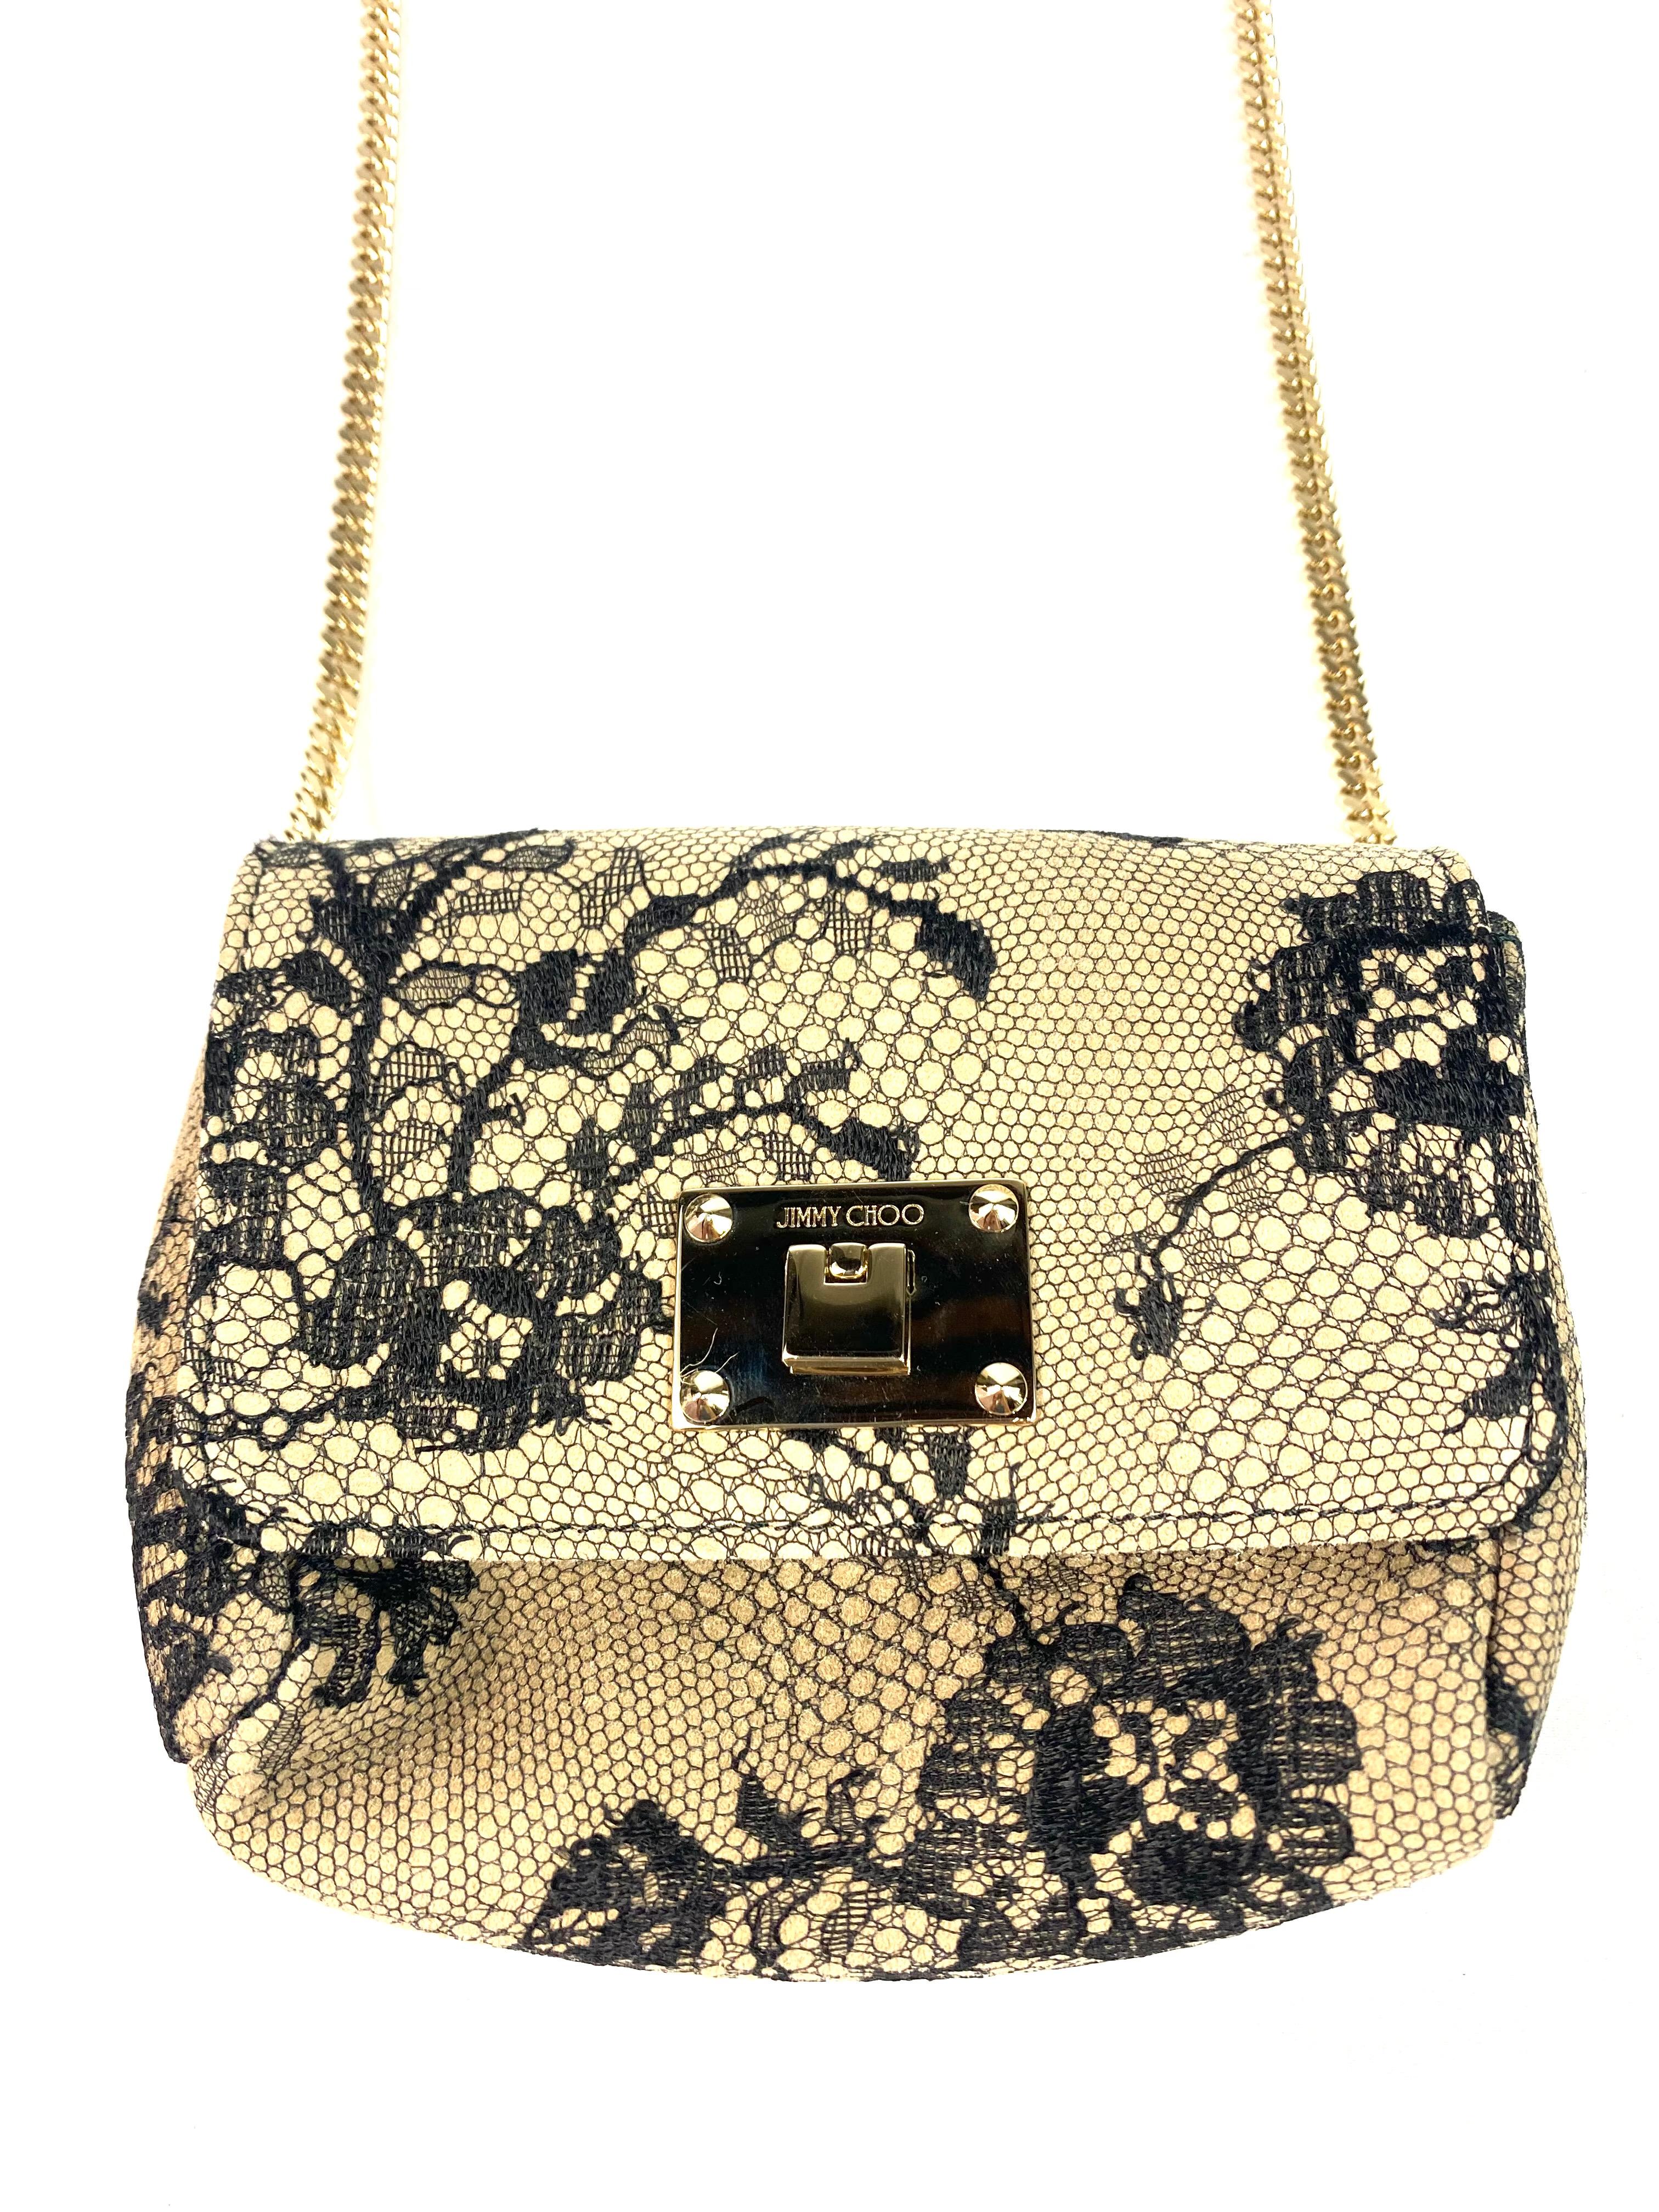 lace handbag